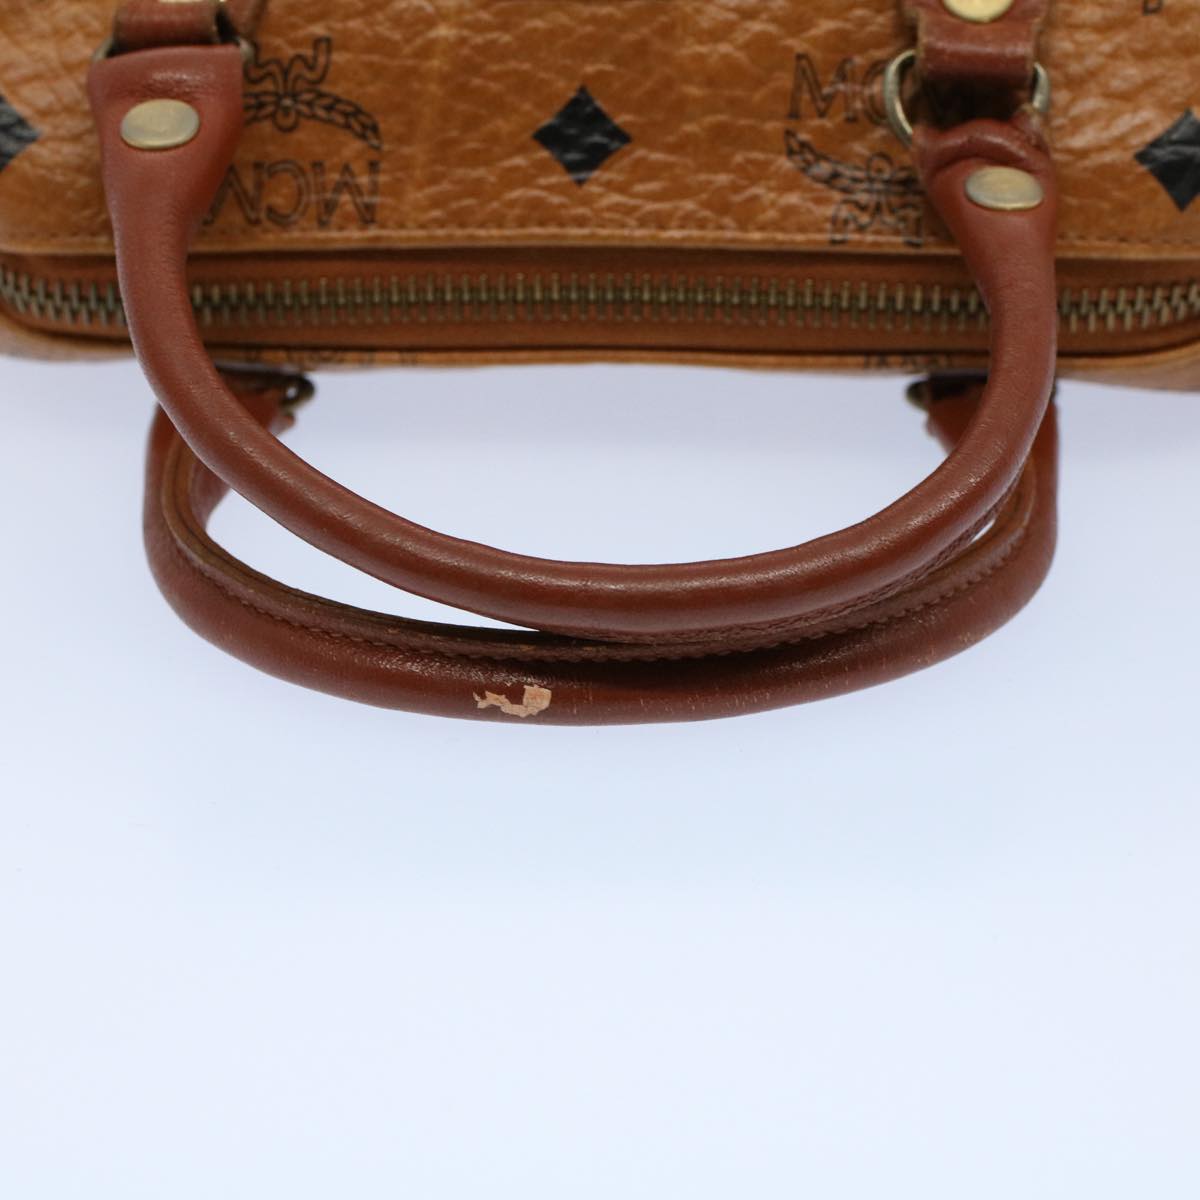 MCM Vicetos Logogram Shoulder Bag PVC Leather 2way Brown Auth 54356